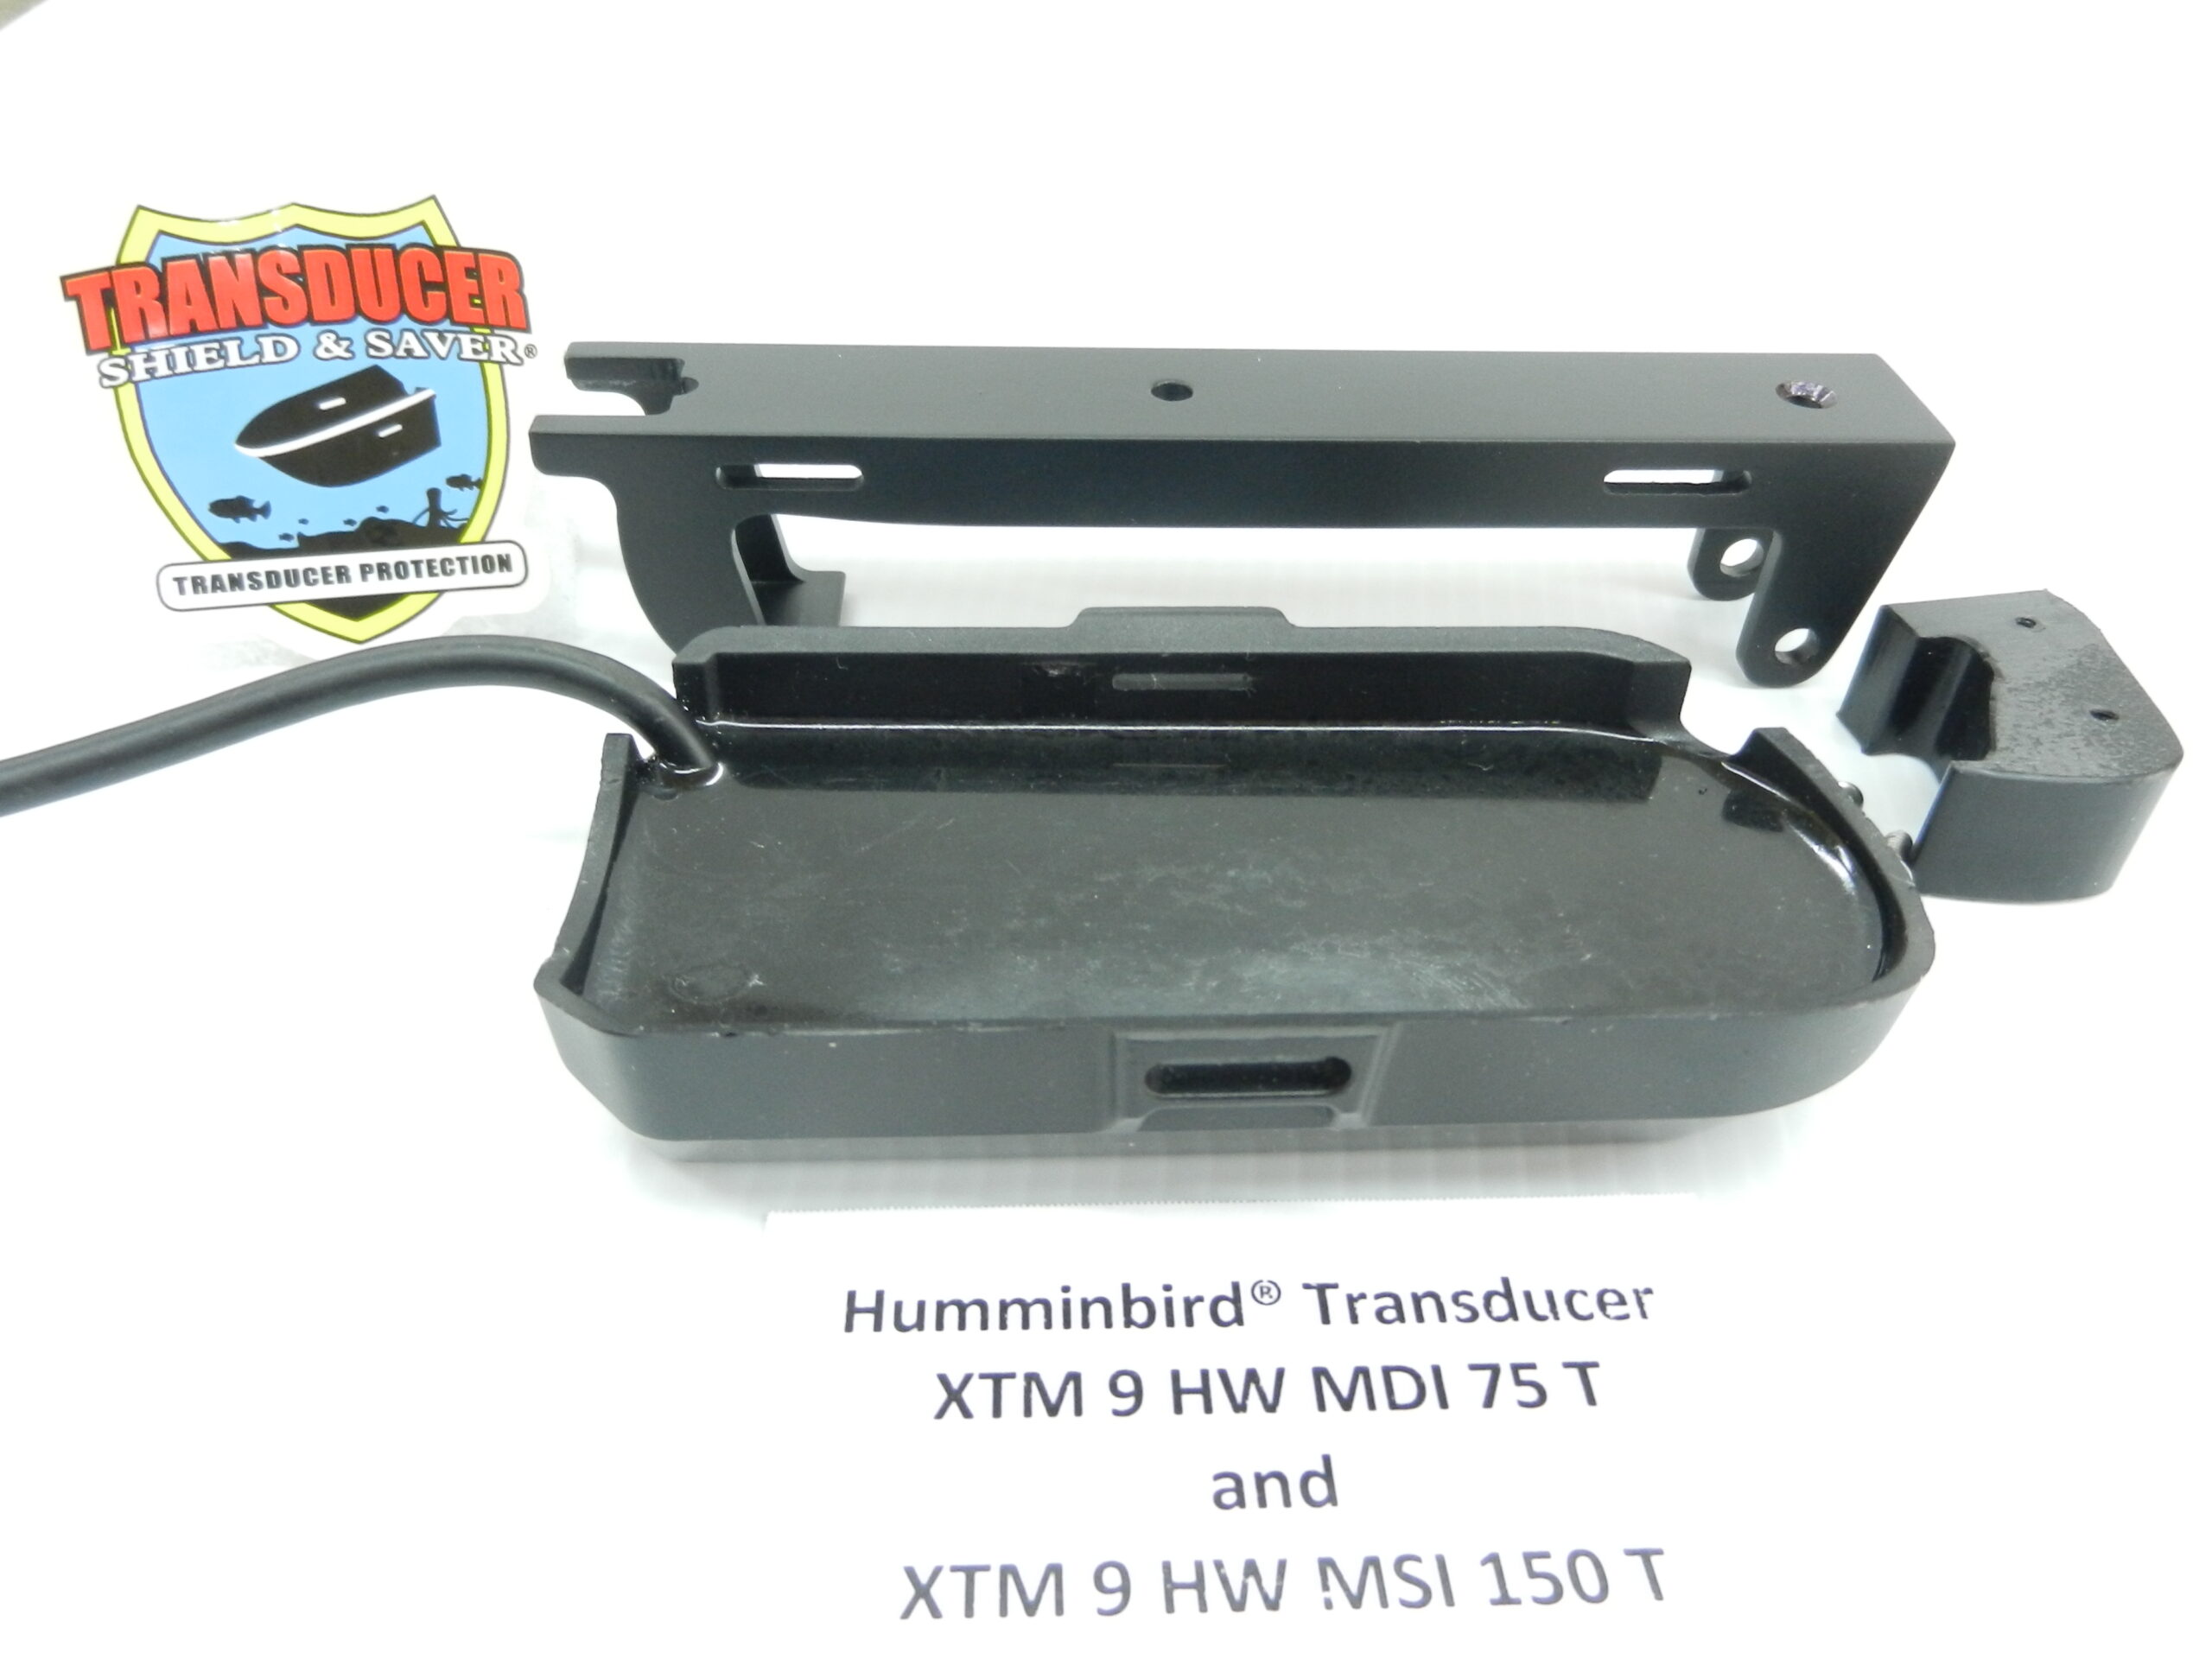 TS-SP-SH to fit Lowrance® Hook2 Split Shot transducer # 000-14028-001